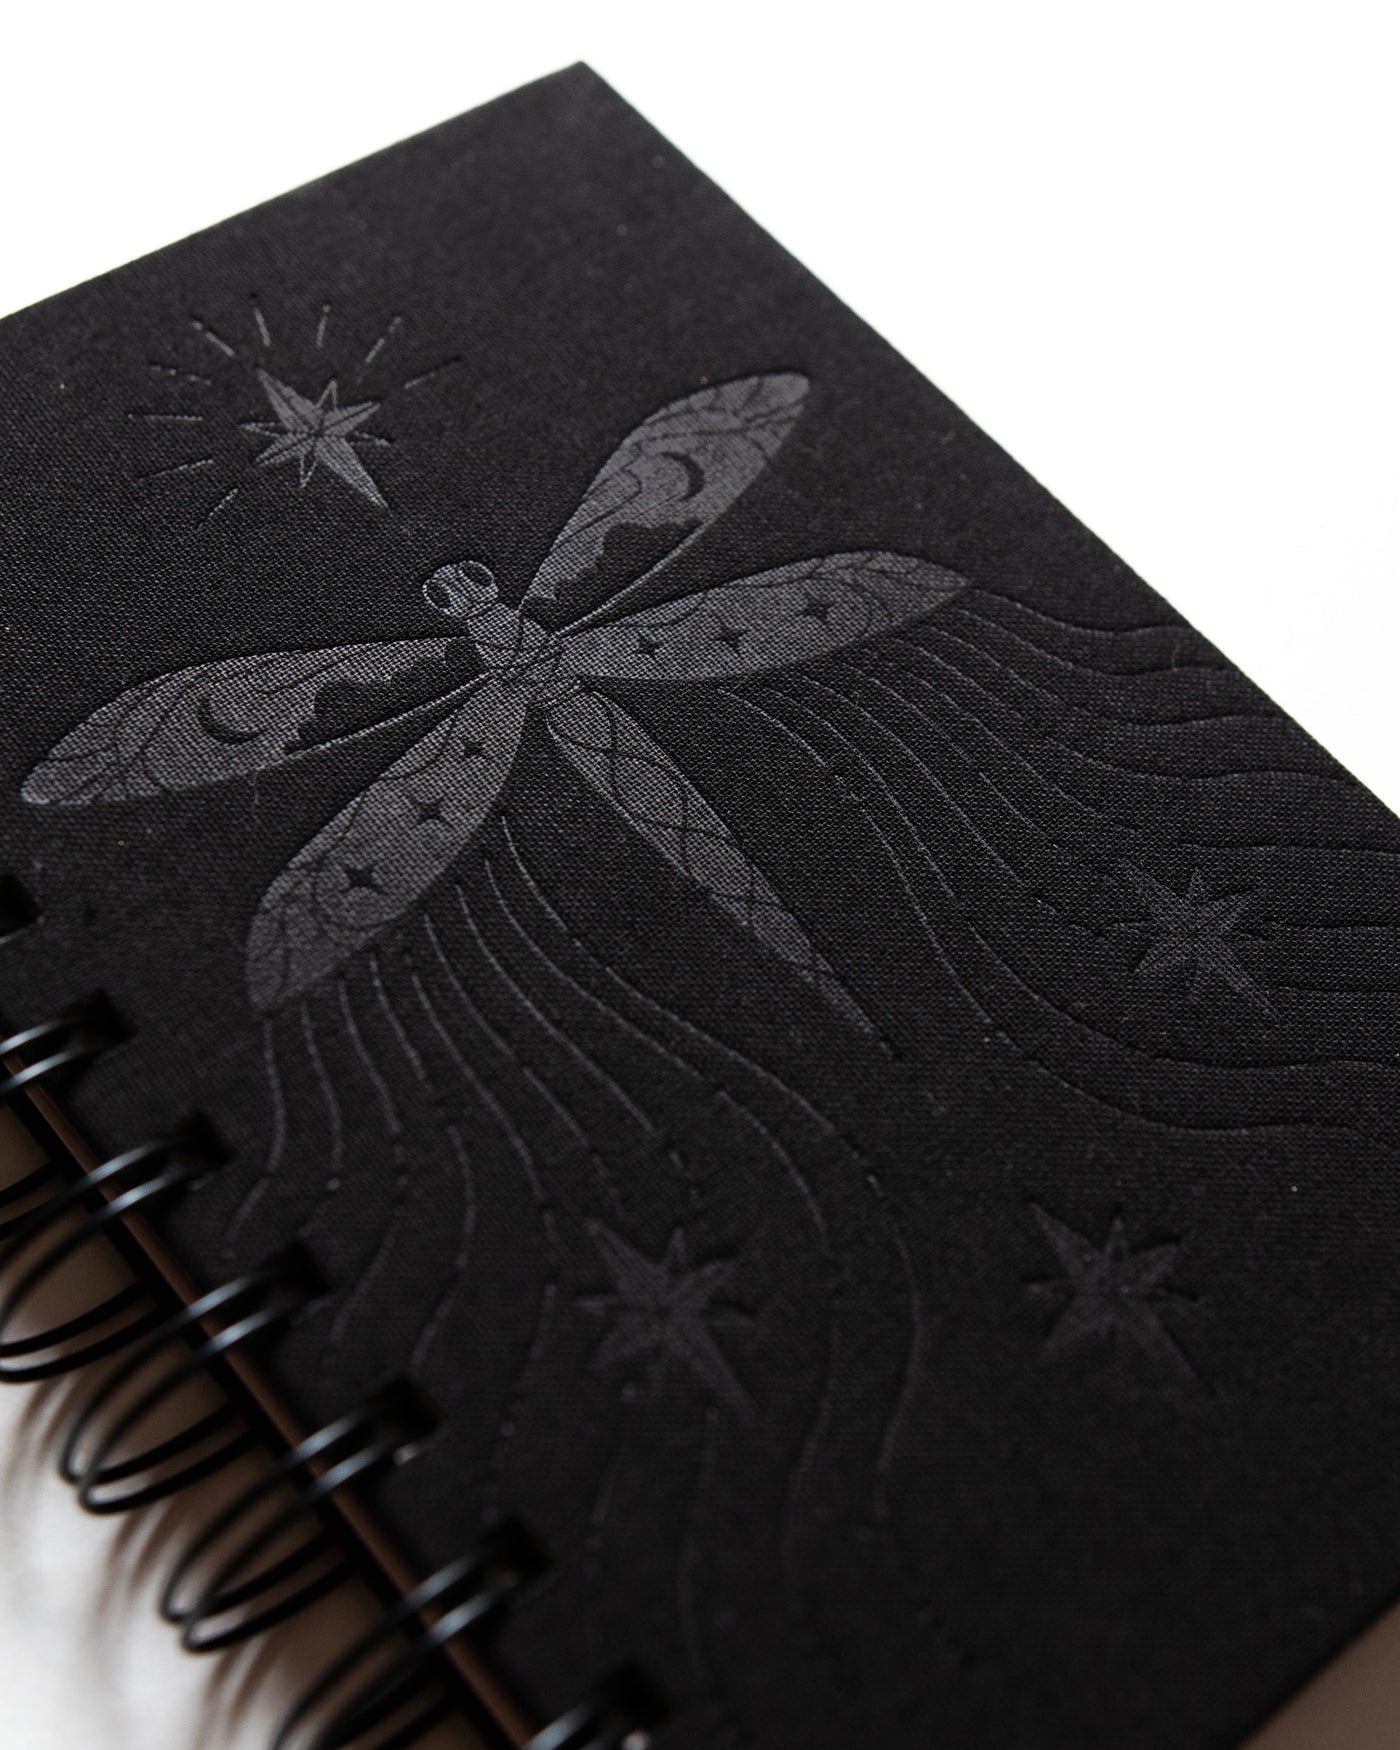 Dragonfly Spiral Bound Notebook - Wholesale